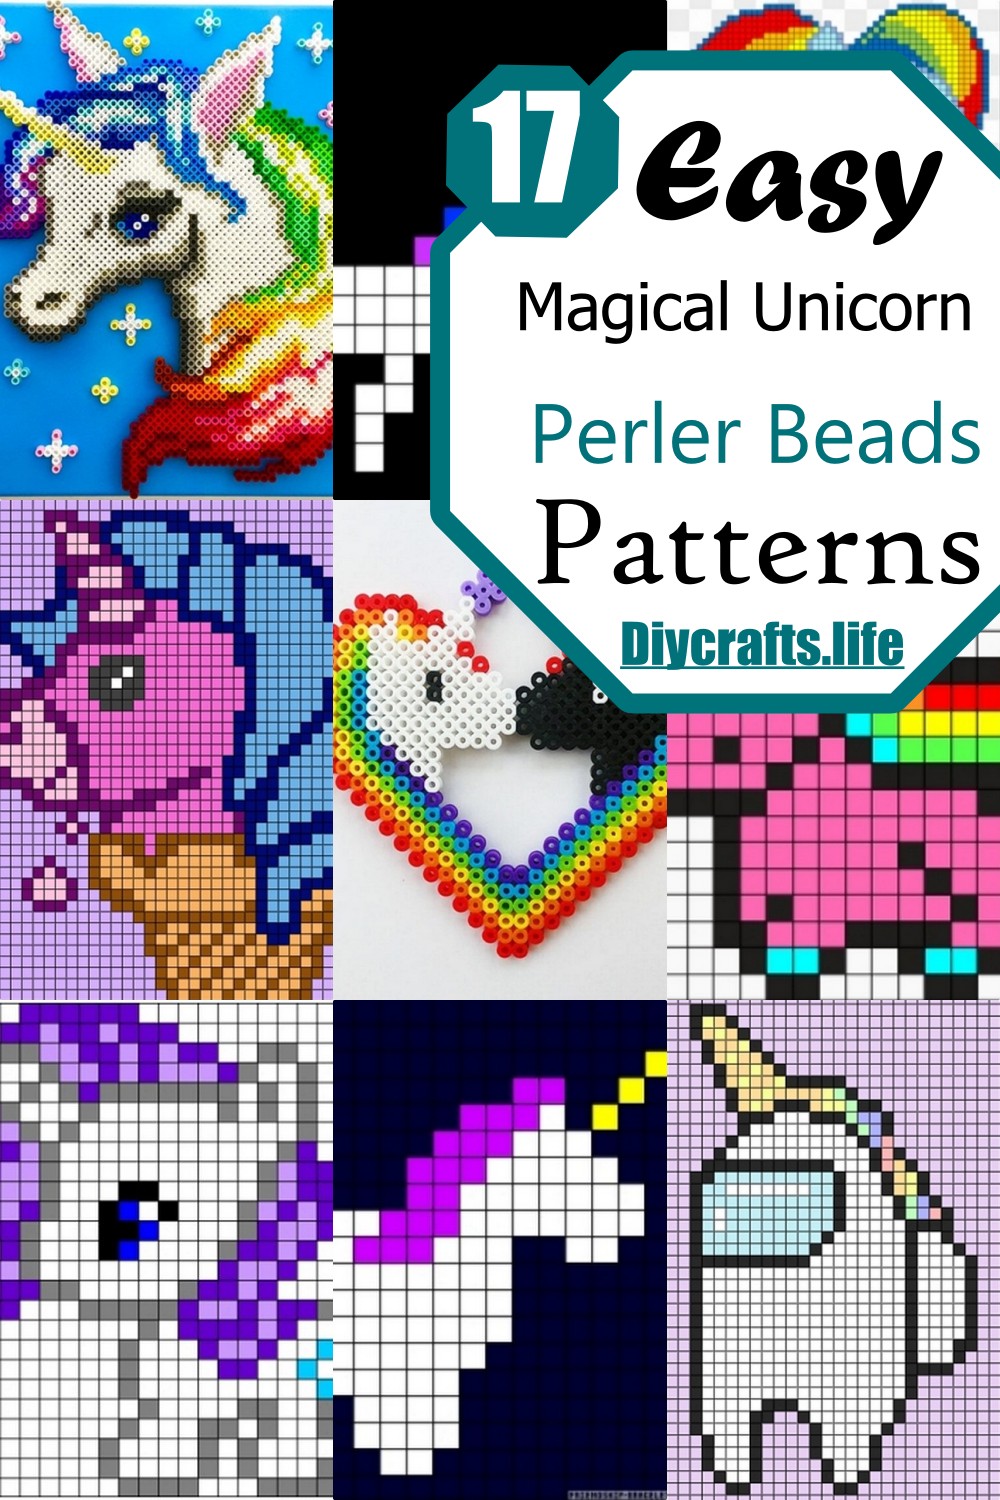 Easy Magical Unicorn Perler Beads Patterns